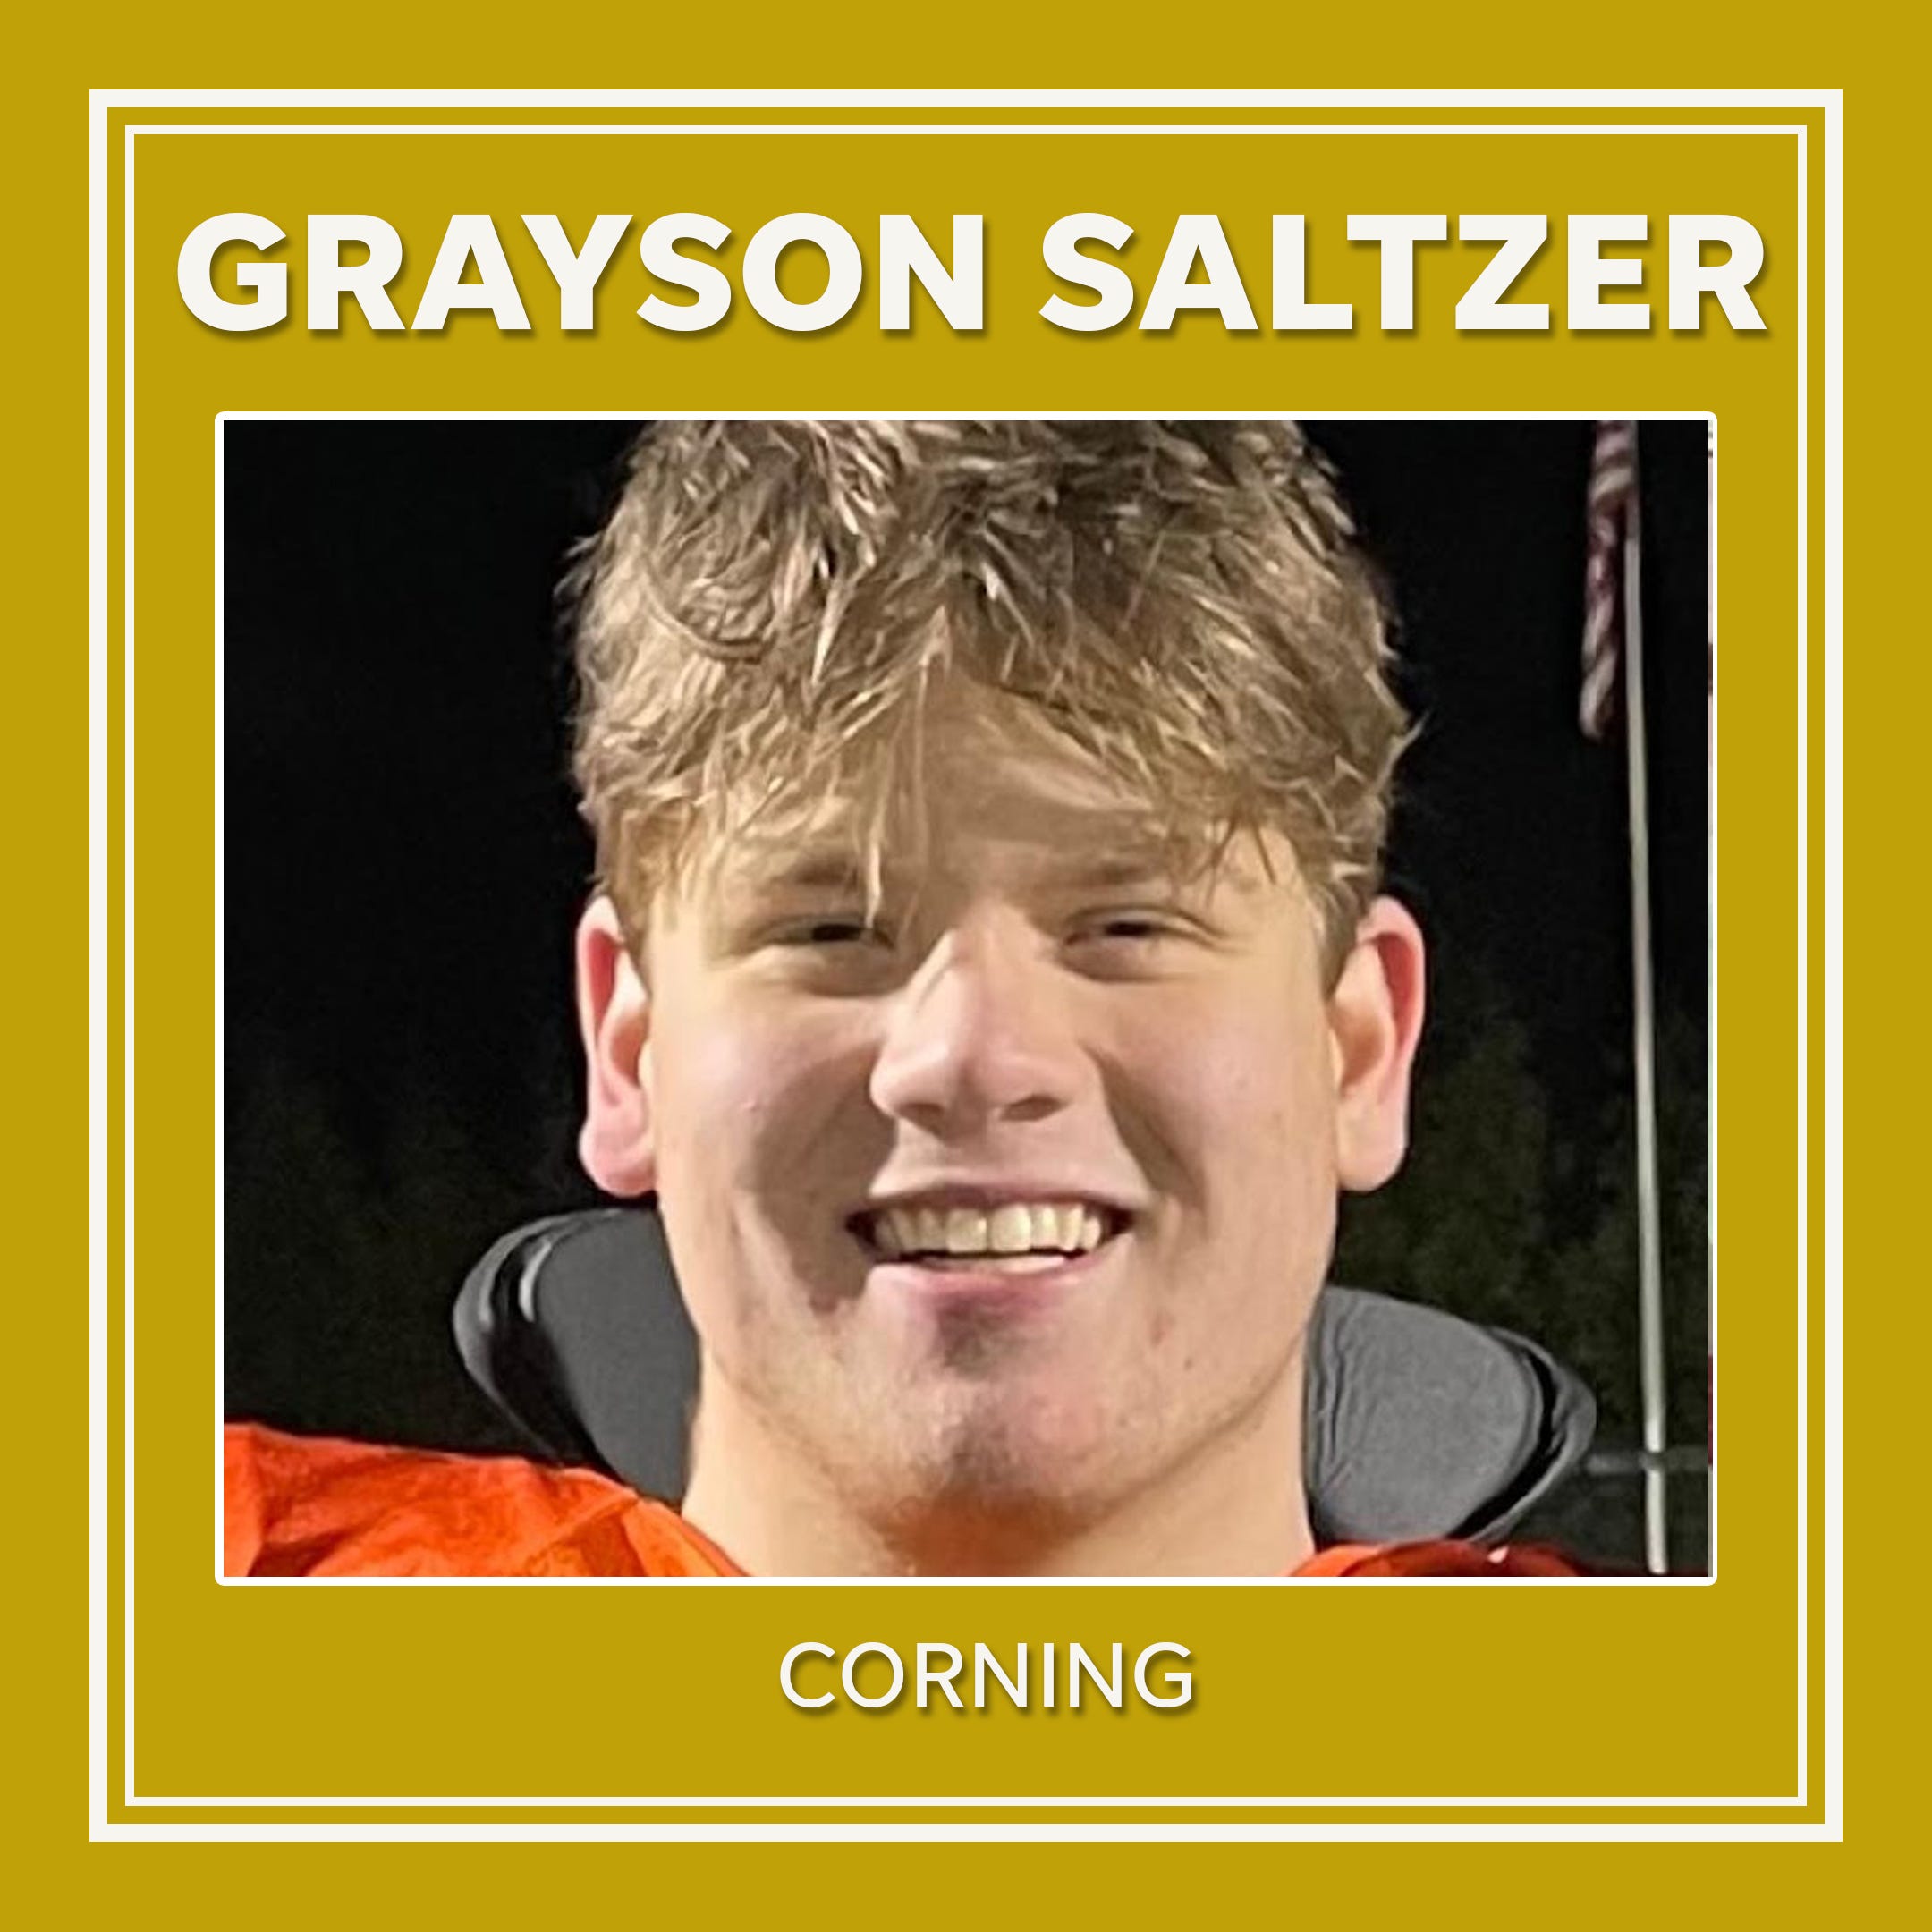 Grayson Saltzer